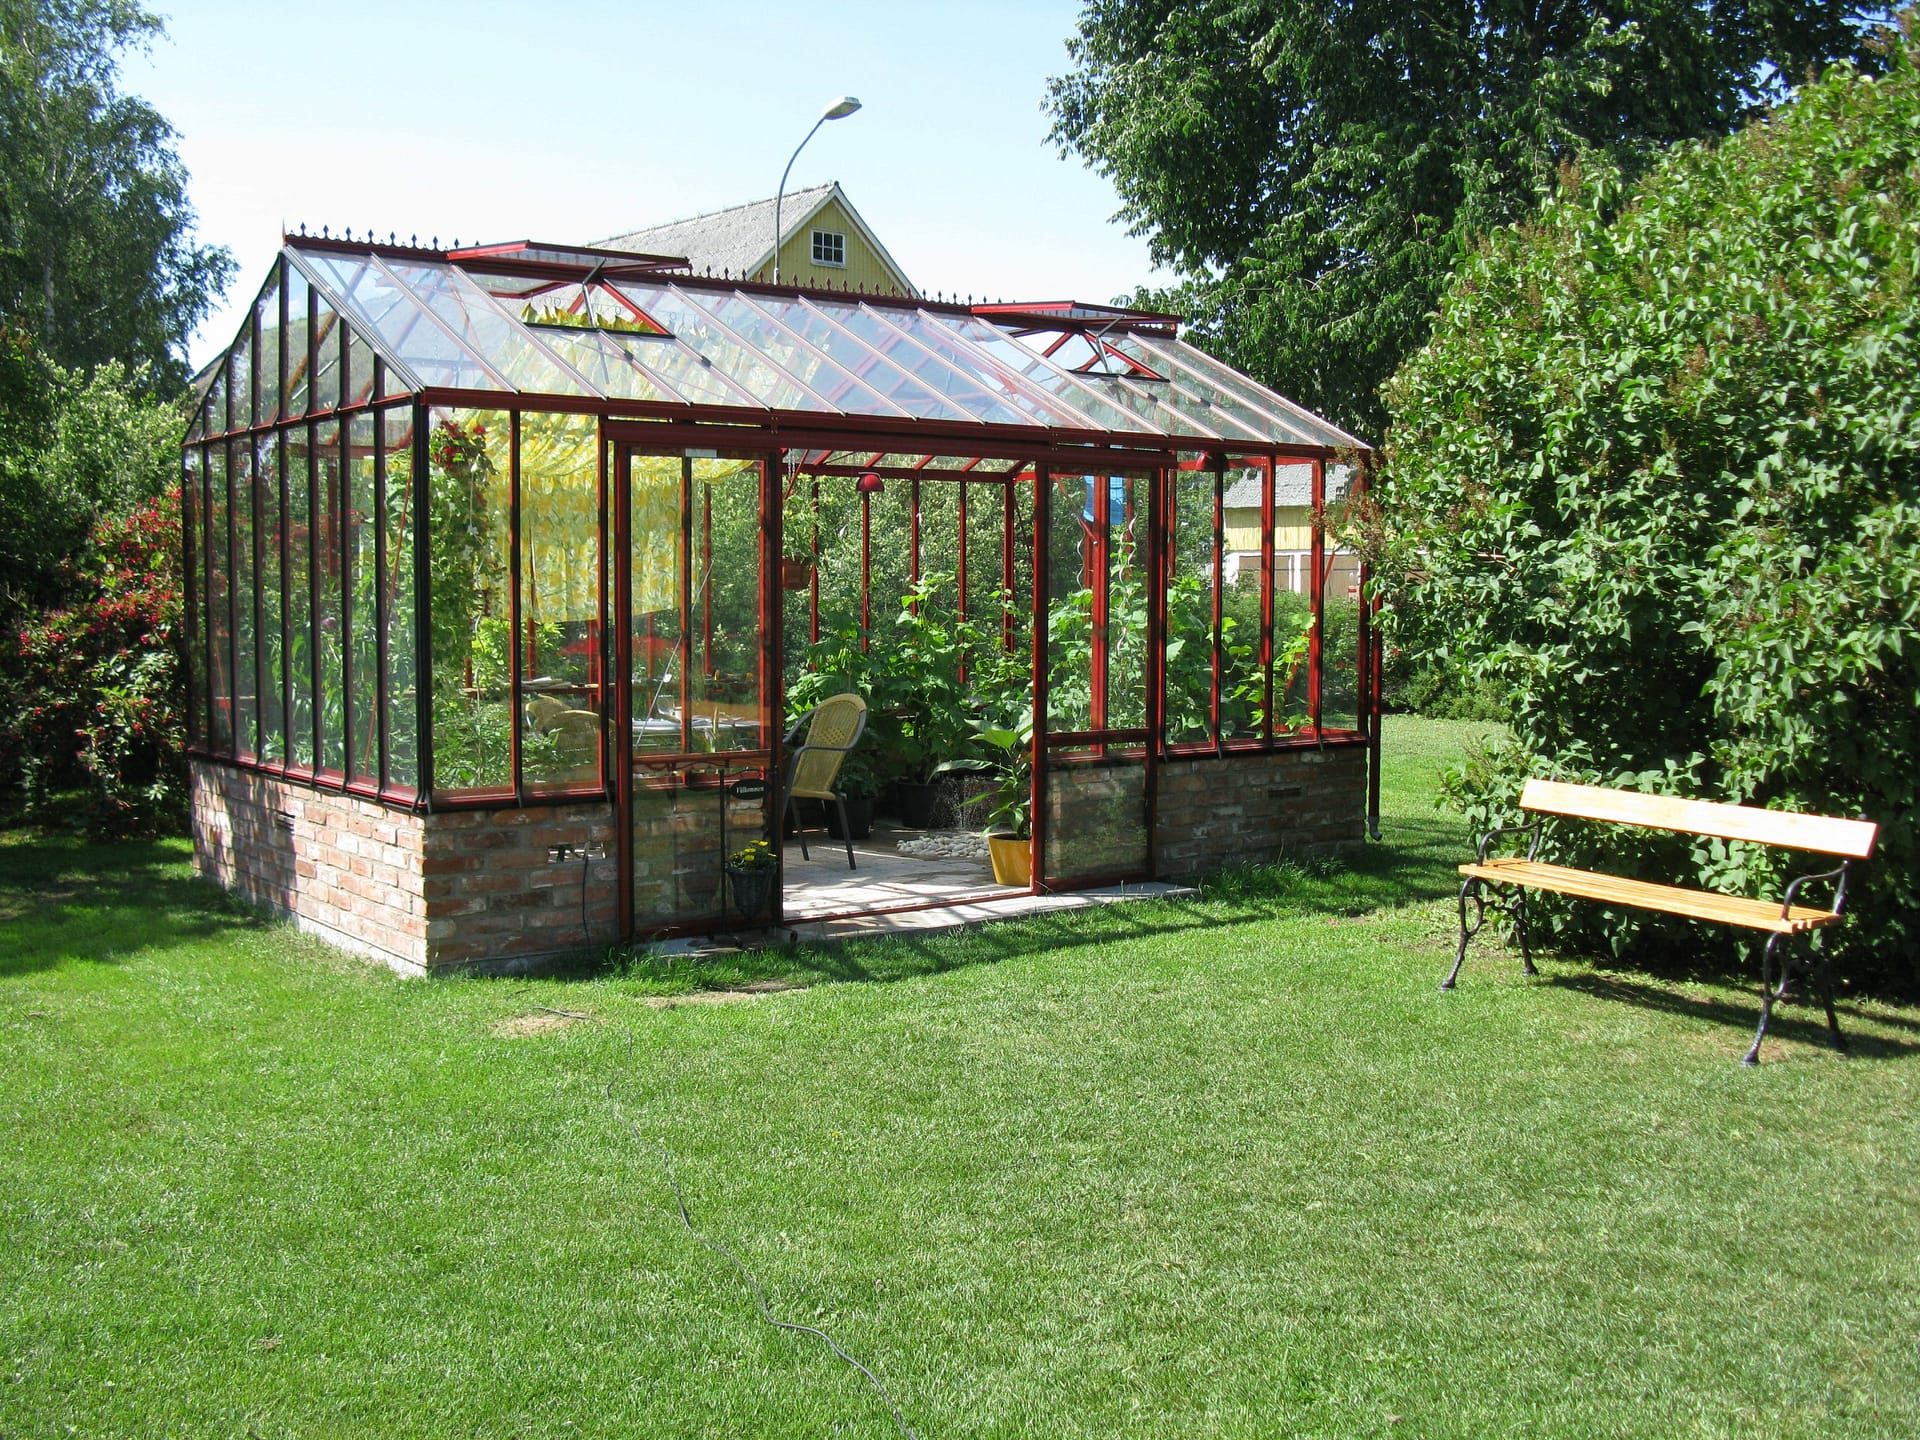 Retro Greenhouse